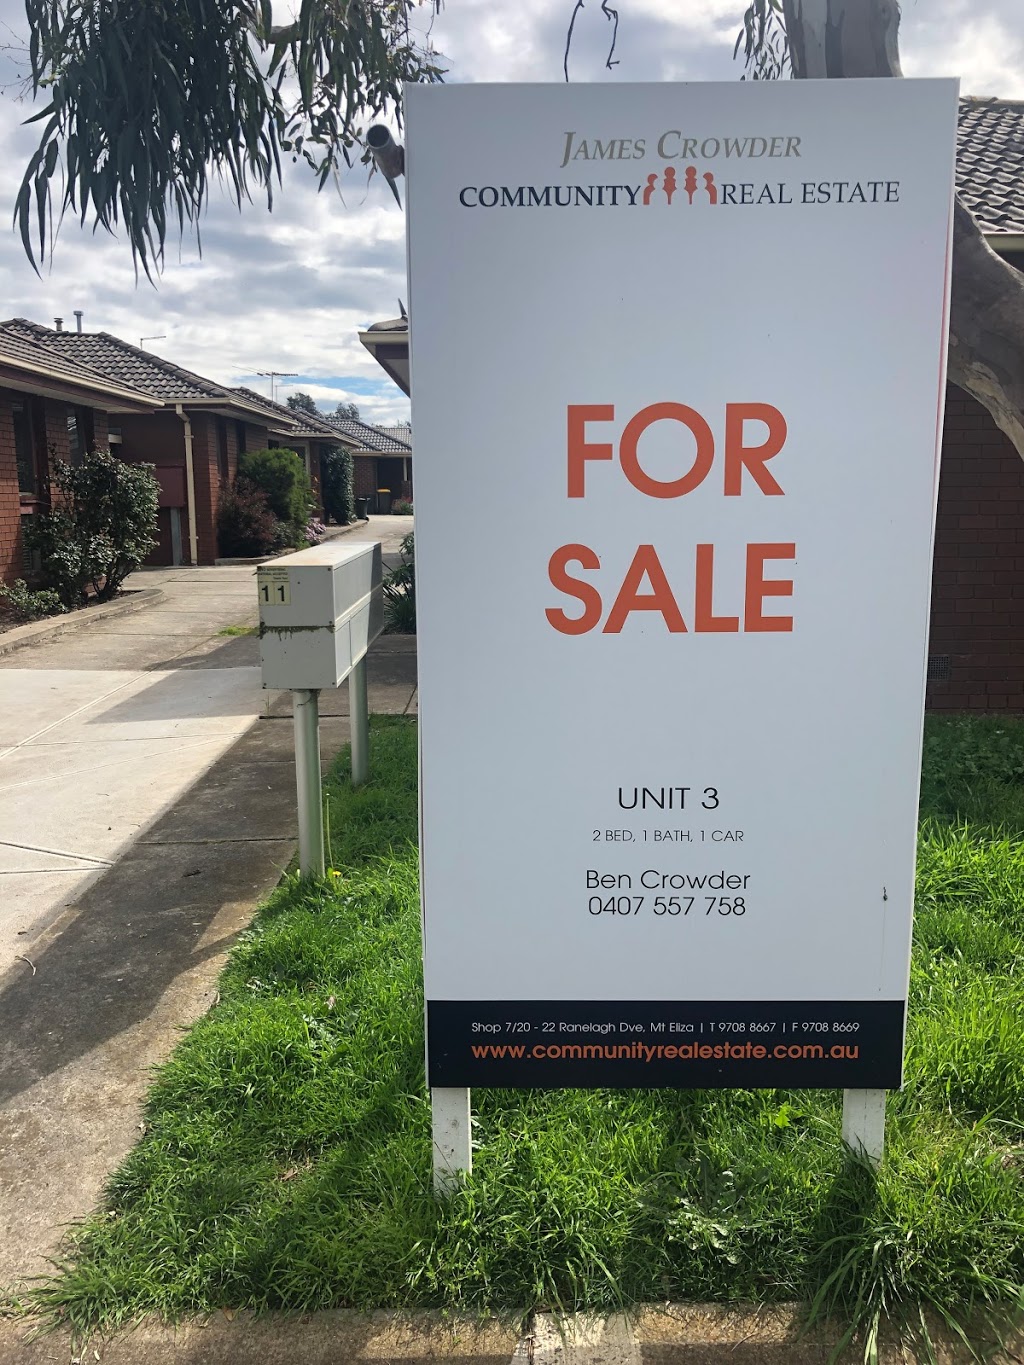 Community Real Estate | 22/20 Ranelagh Dr, Mount Eliza VIC 3930, Australia | Phone: (03) 9708 8667